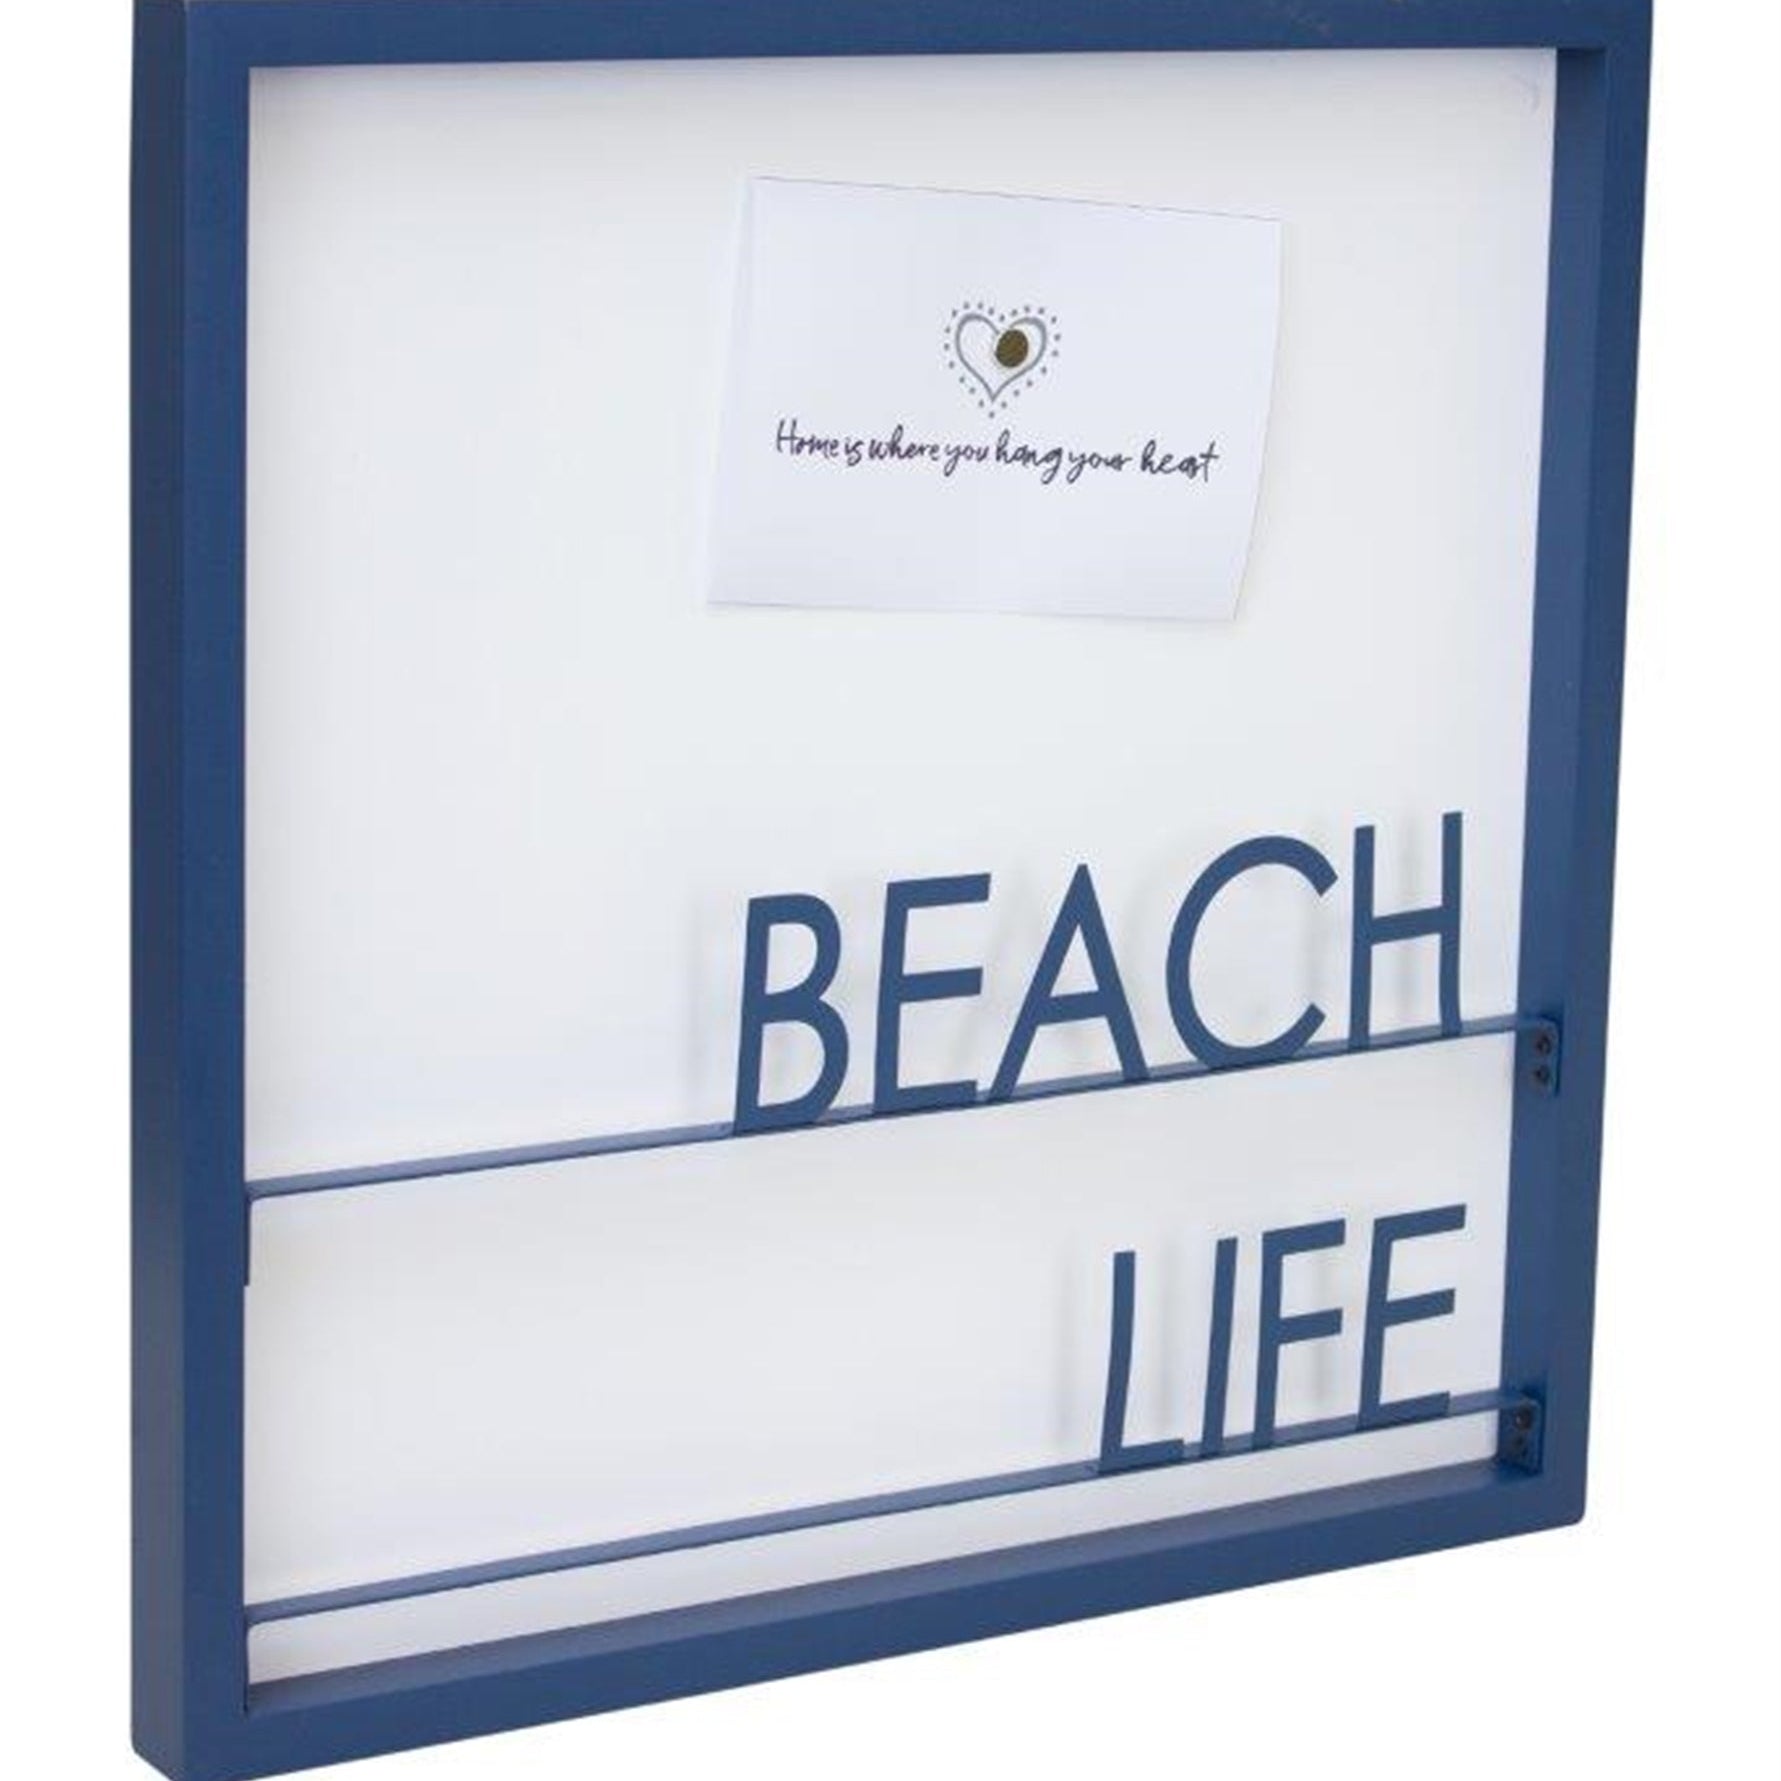 Beach Life Magnetic Memo Board 15.75" - Pier 1